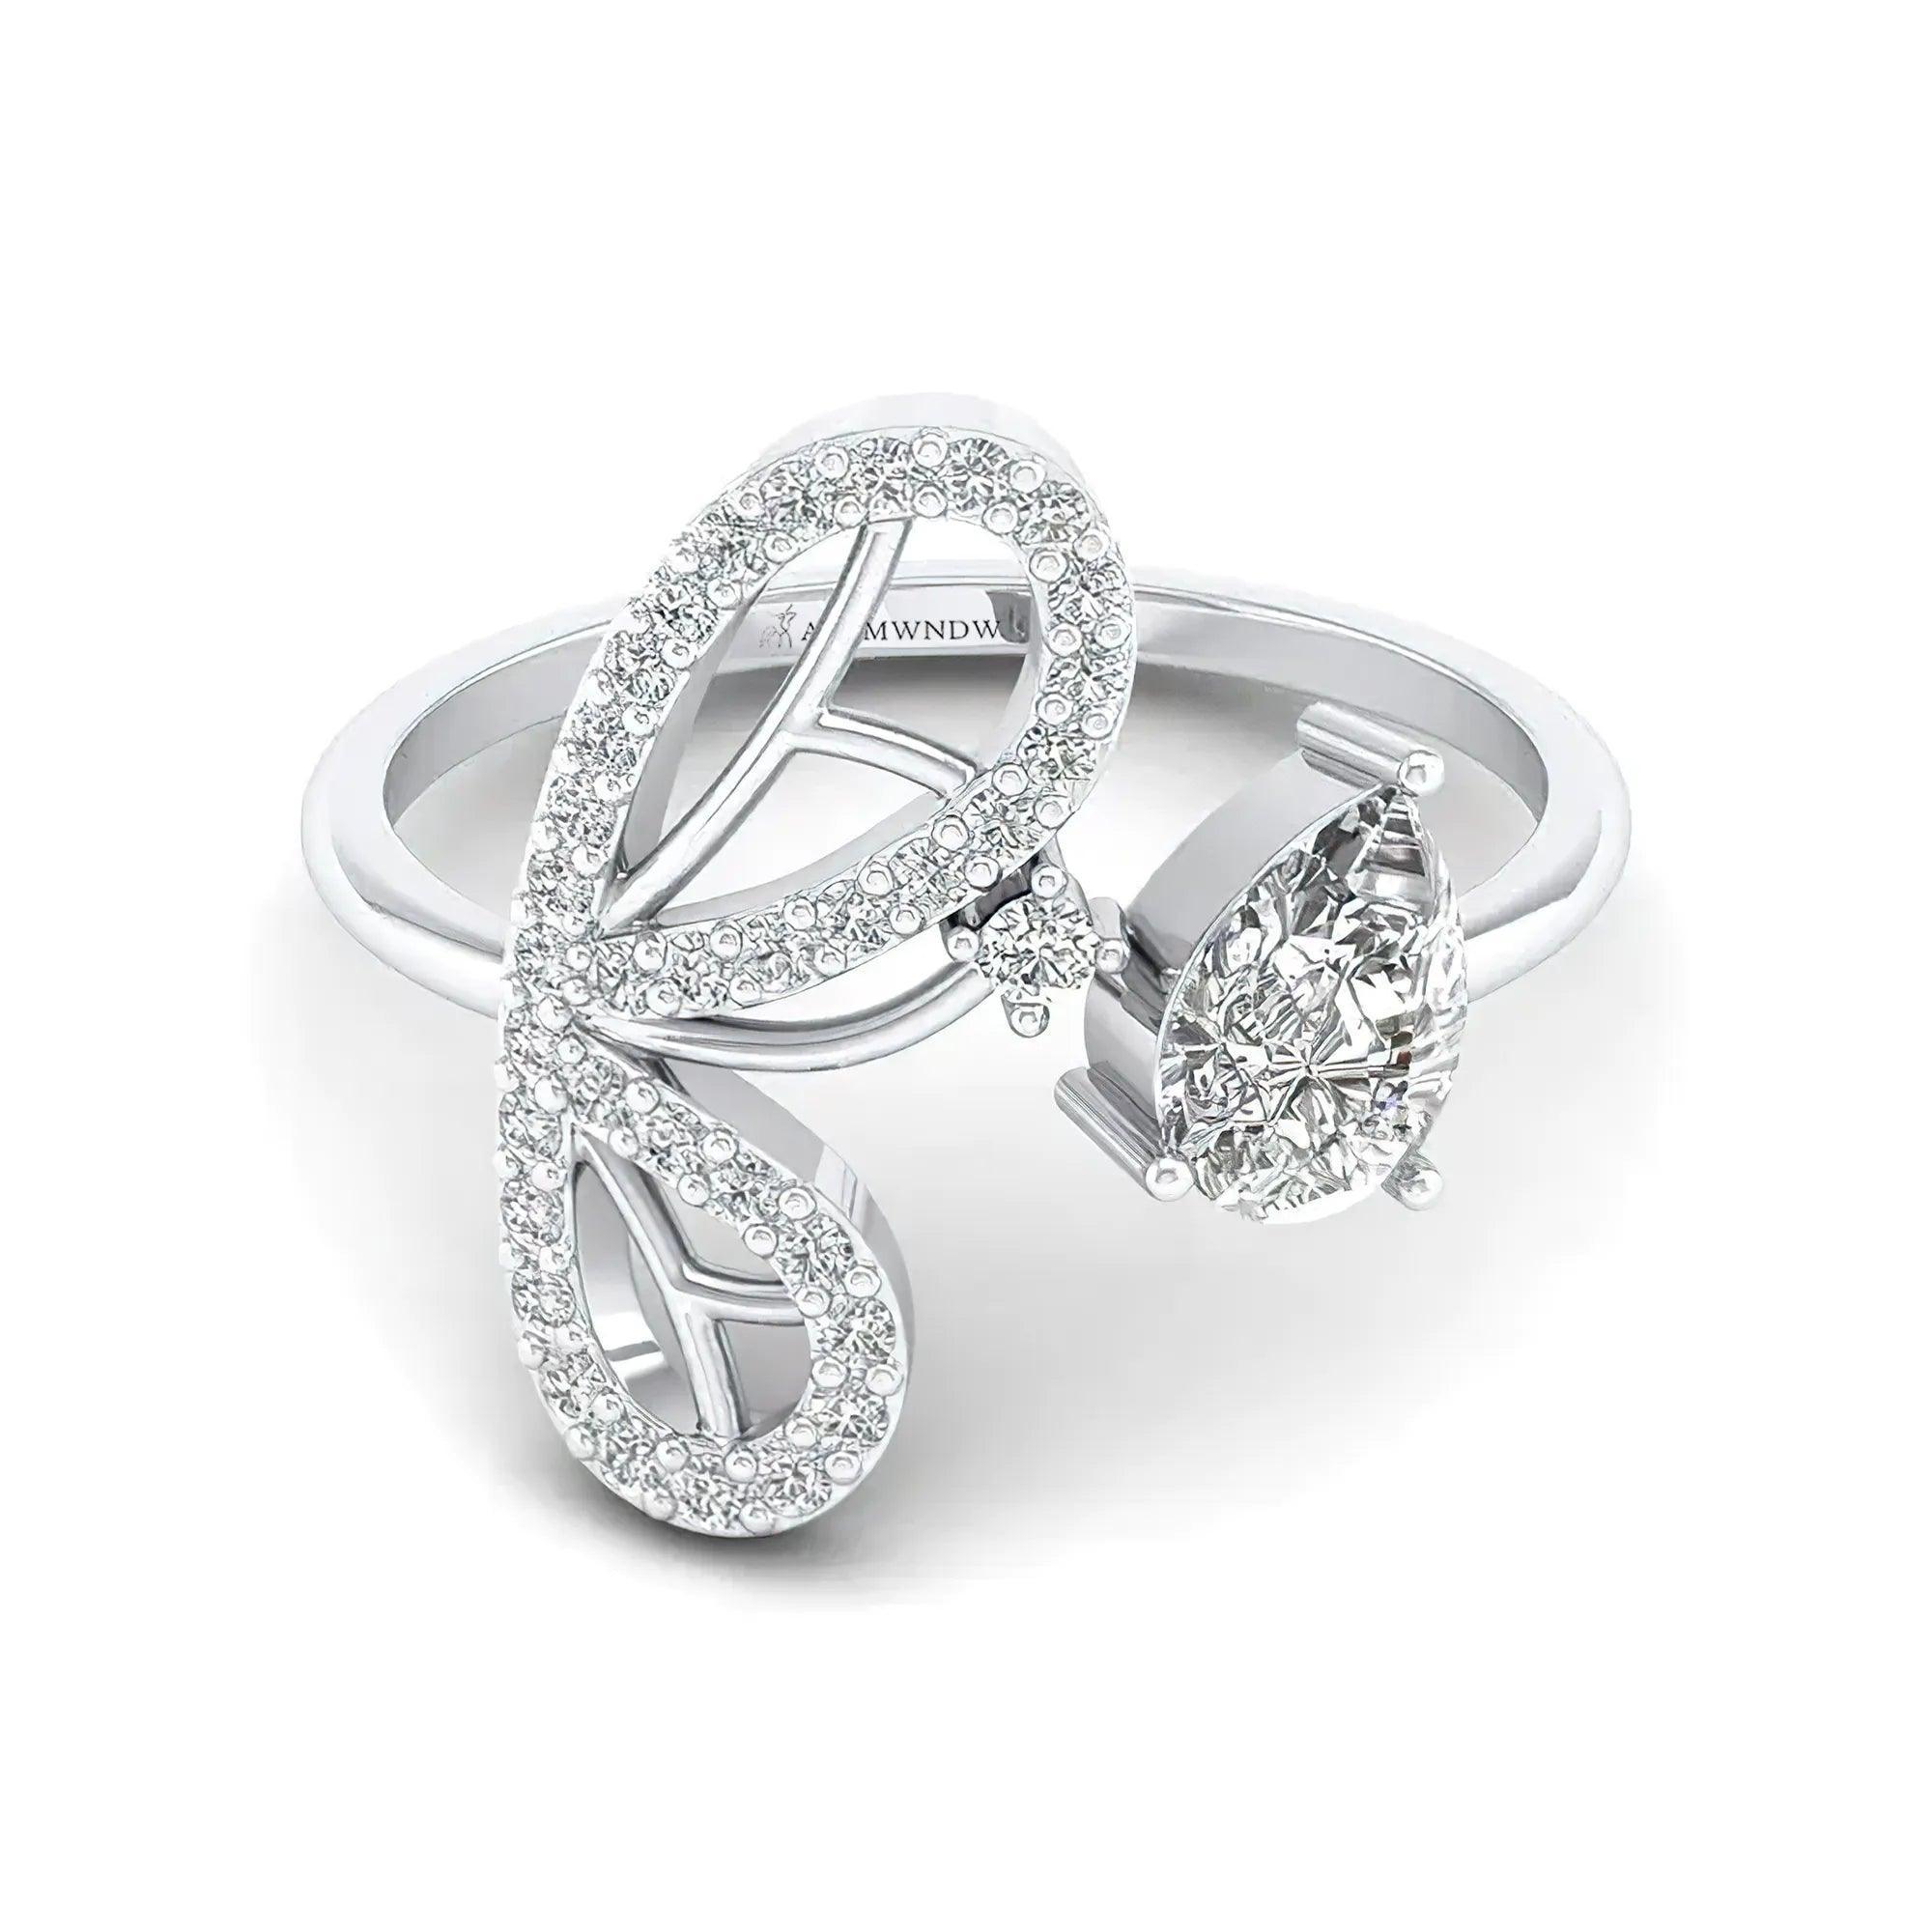 Exquisite Ring With Lab Grown Diamond - Alymwndw